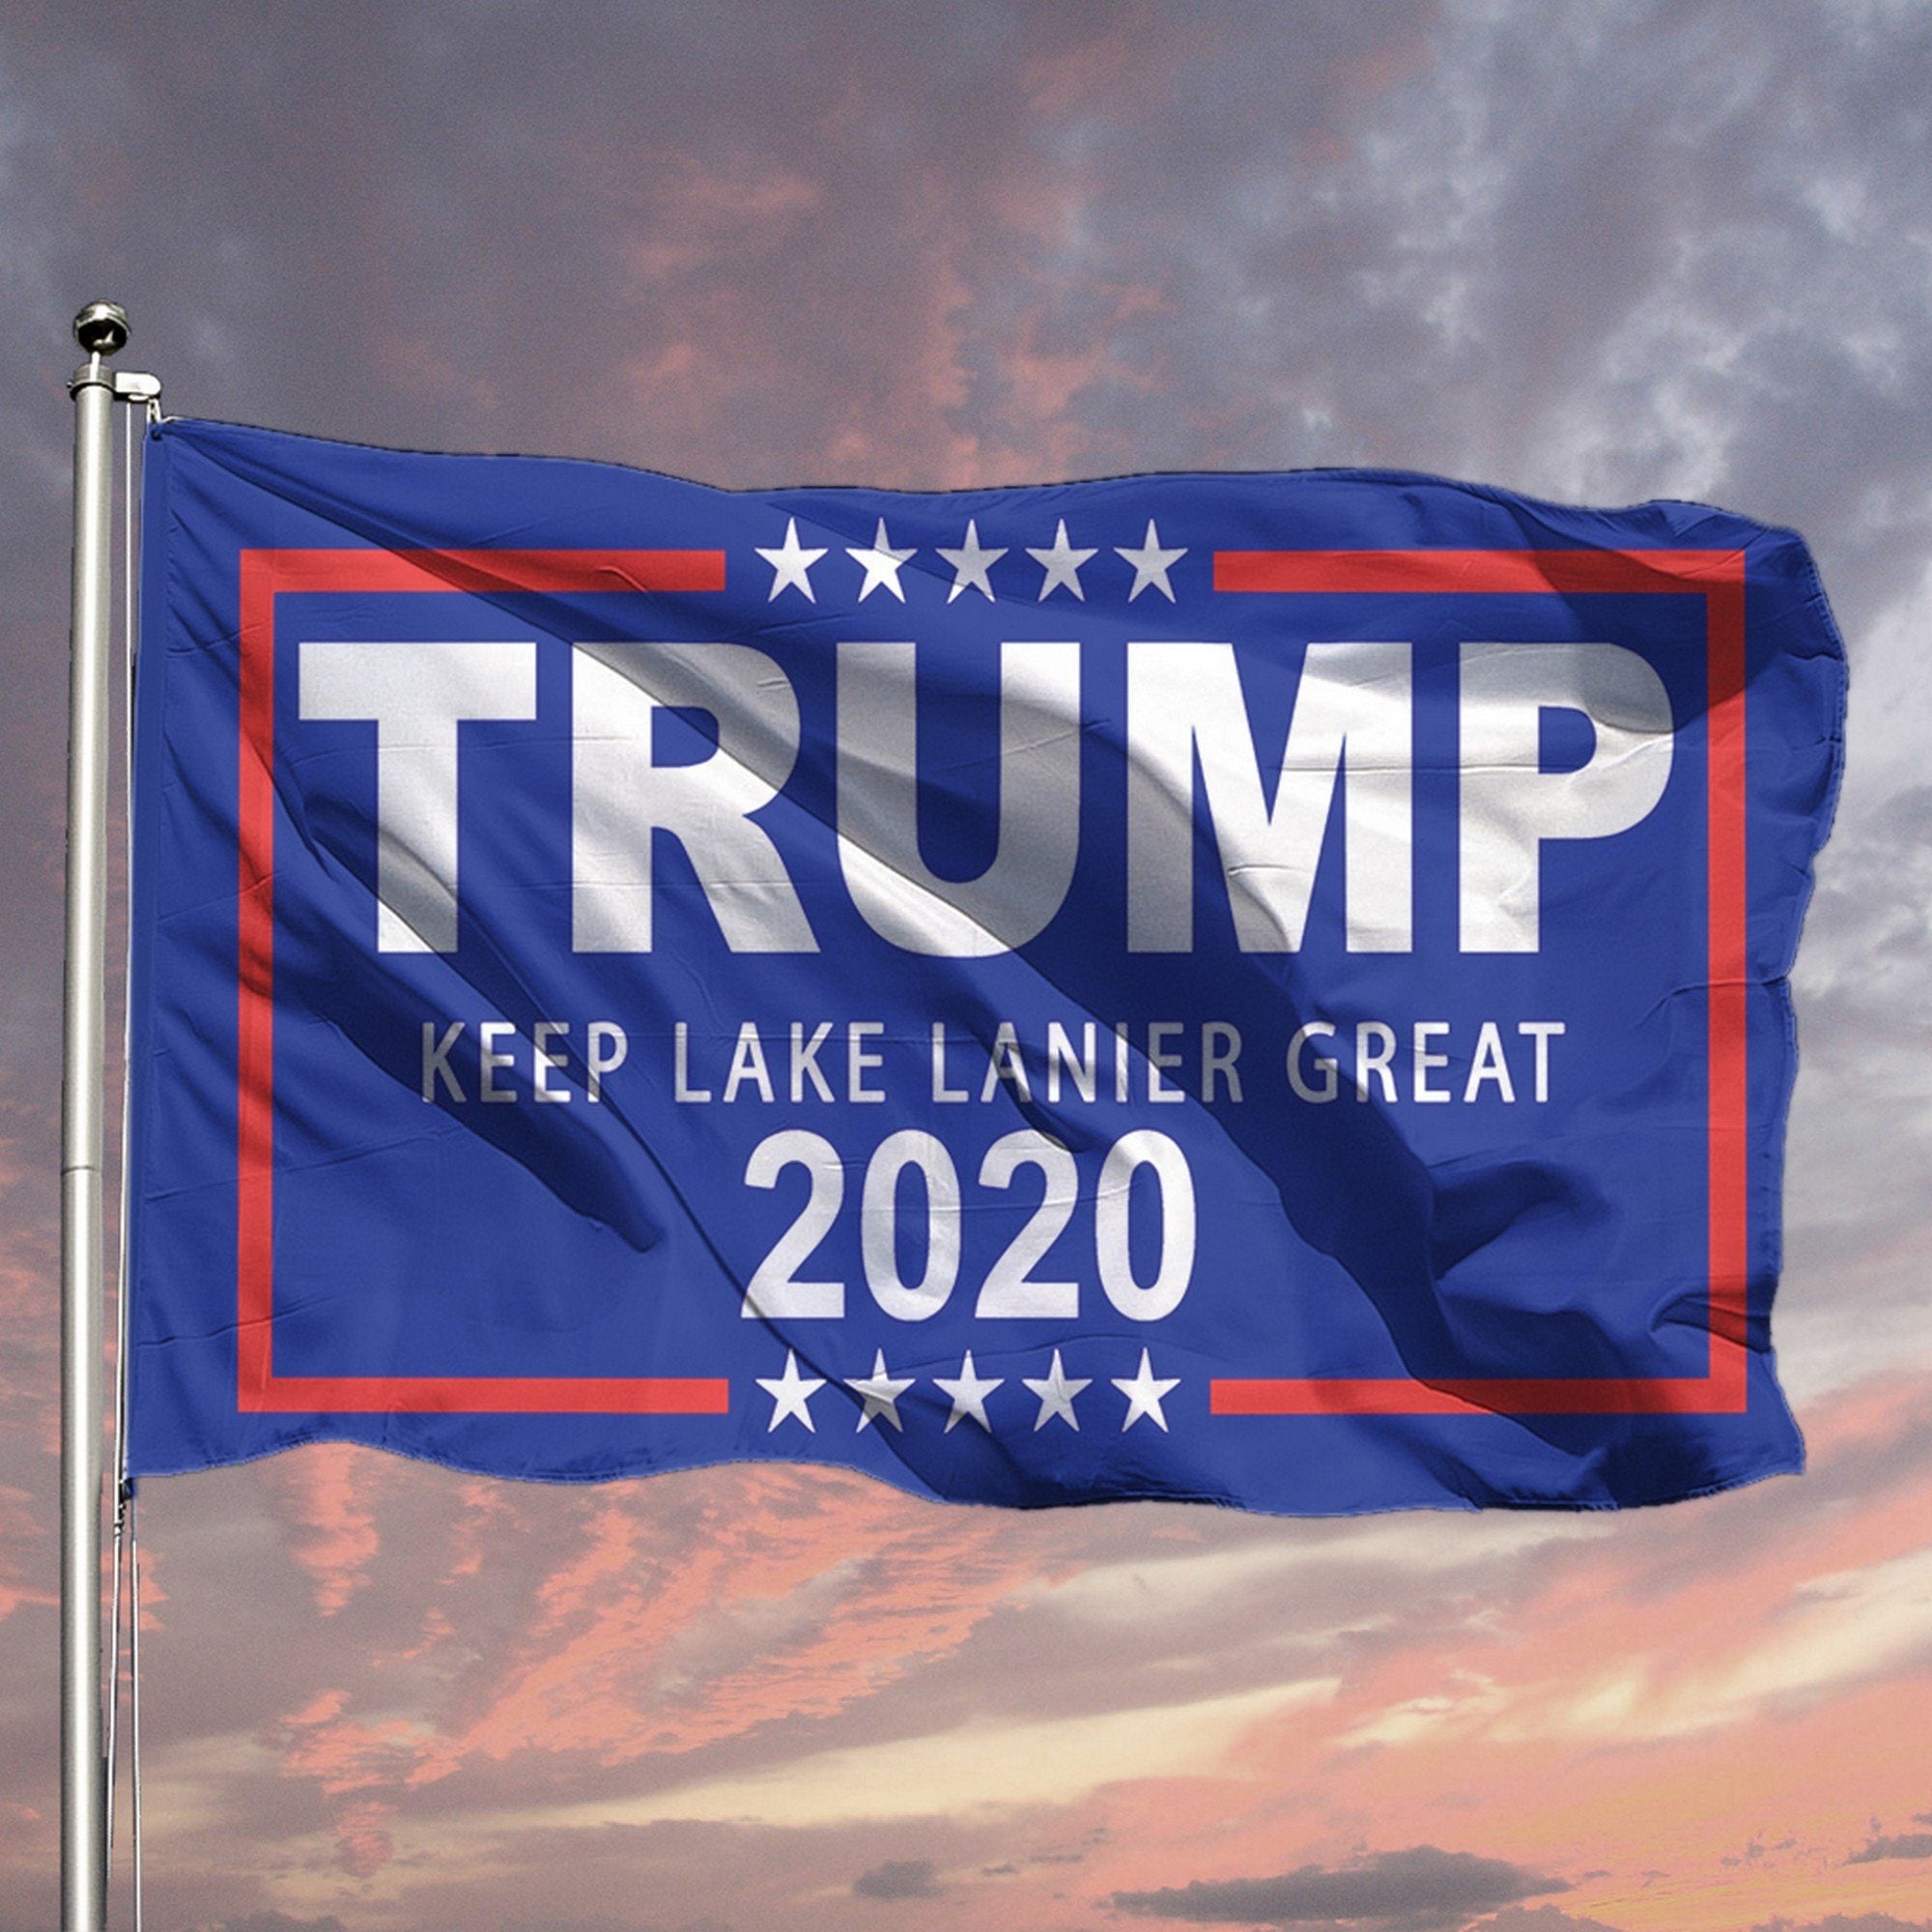 Trump Boat Flags - Keep Lake Lanier Great - Houseboat Kings